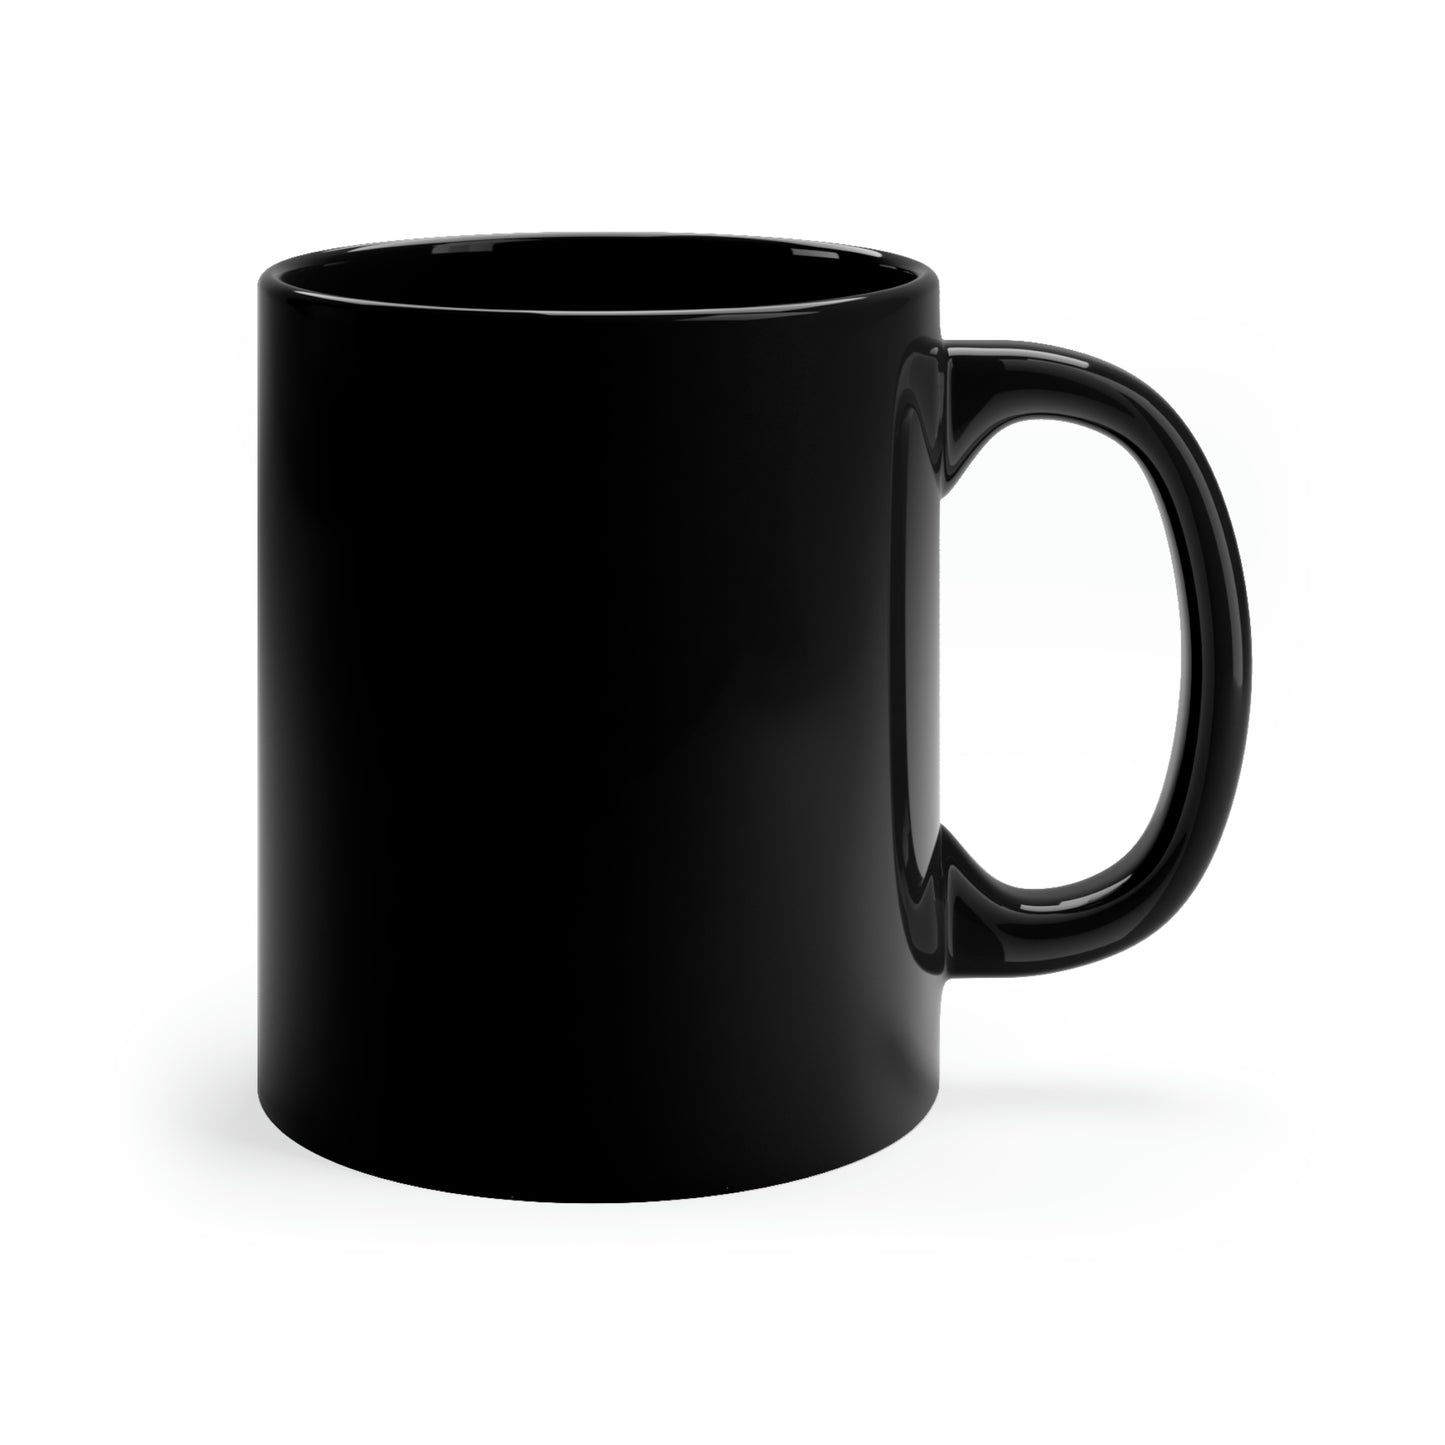 BSMG Black Ceramic Mug